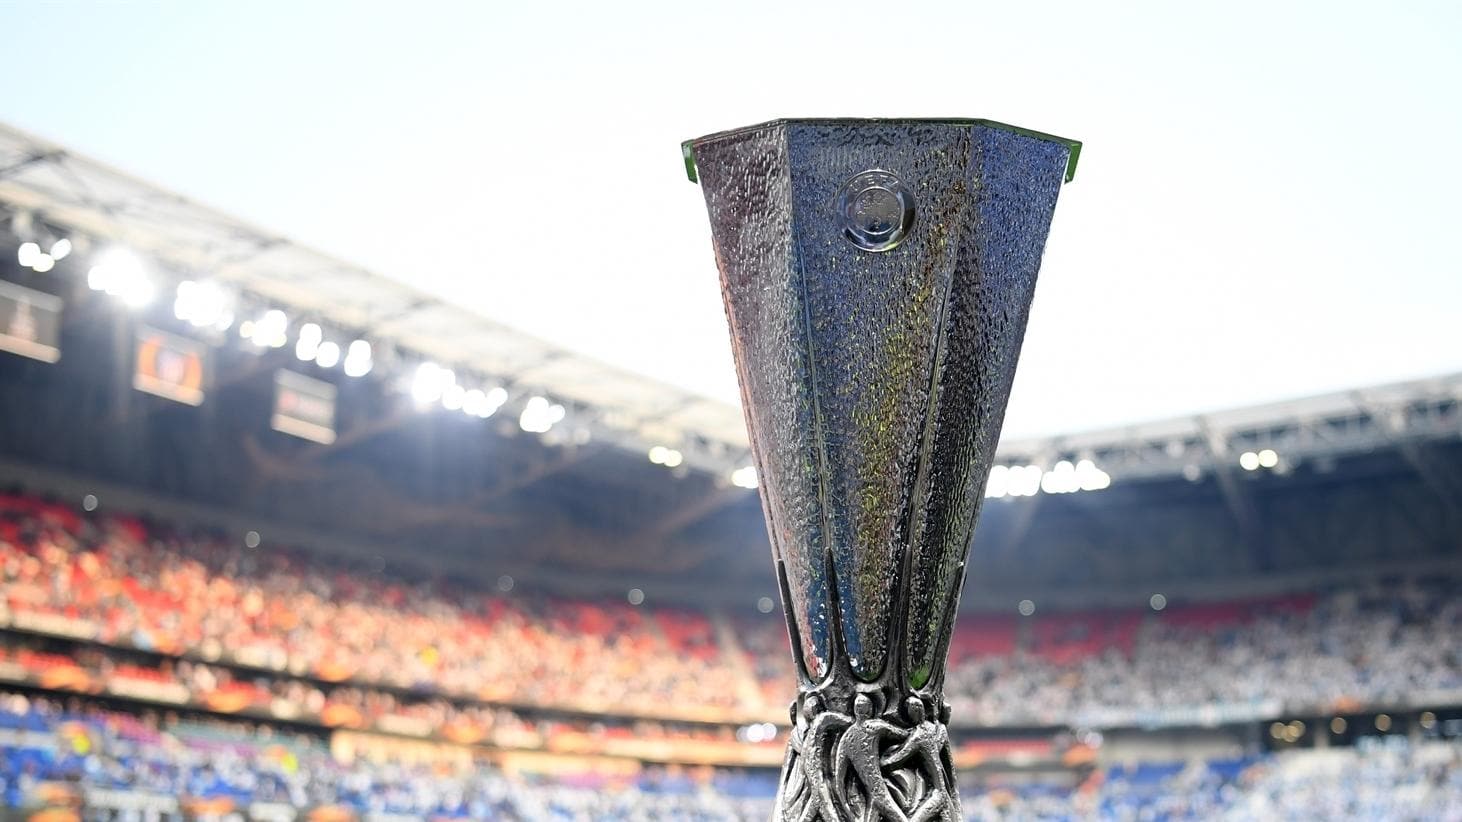 Uefa Europa League Final 2018 / Uefa Europa League Final Starting Xi